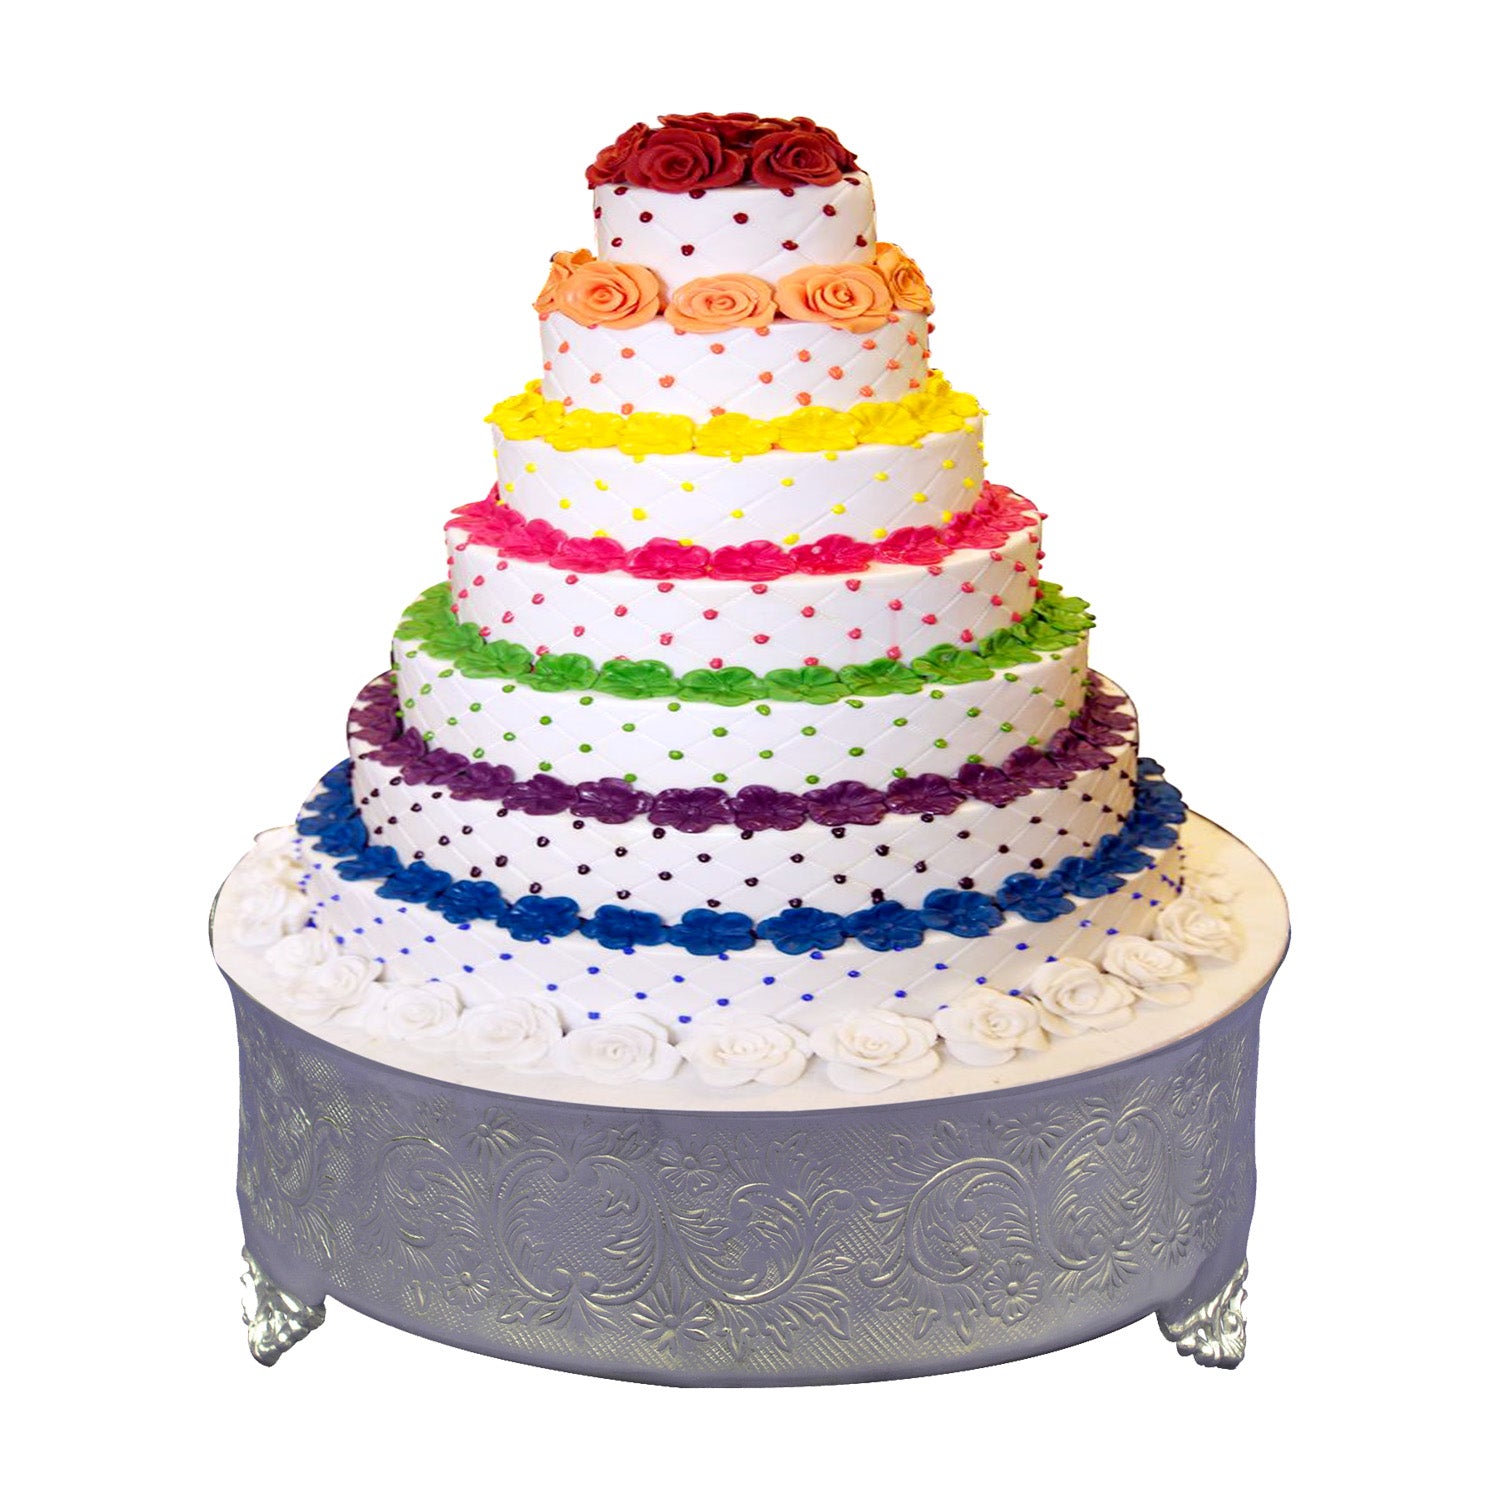  GiftBay Wedding Cake Stand  Round 20 Silver